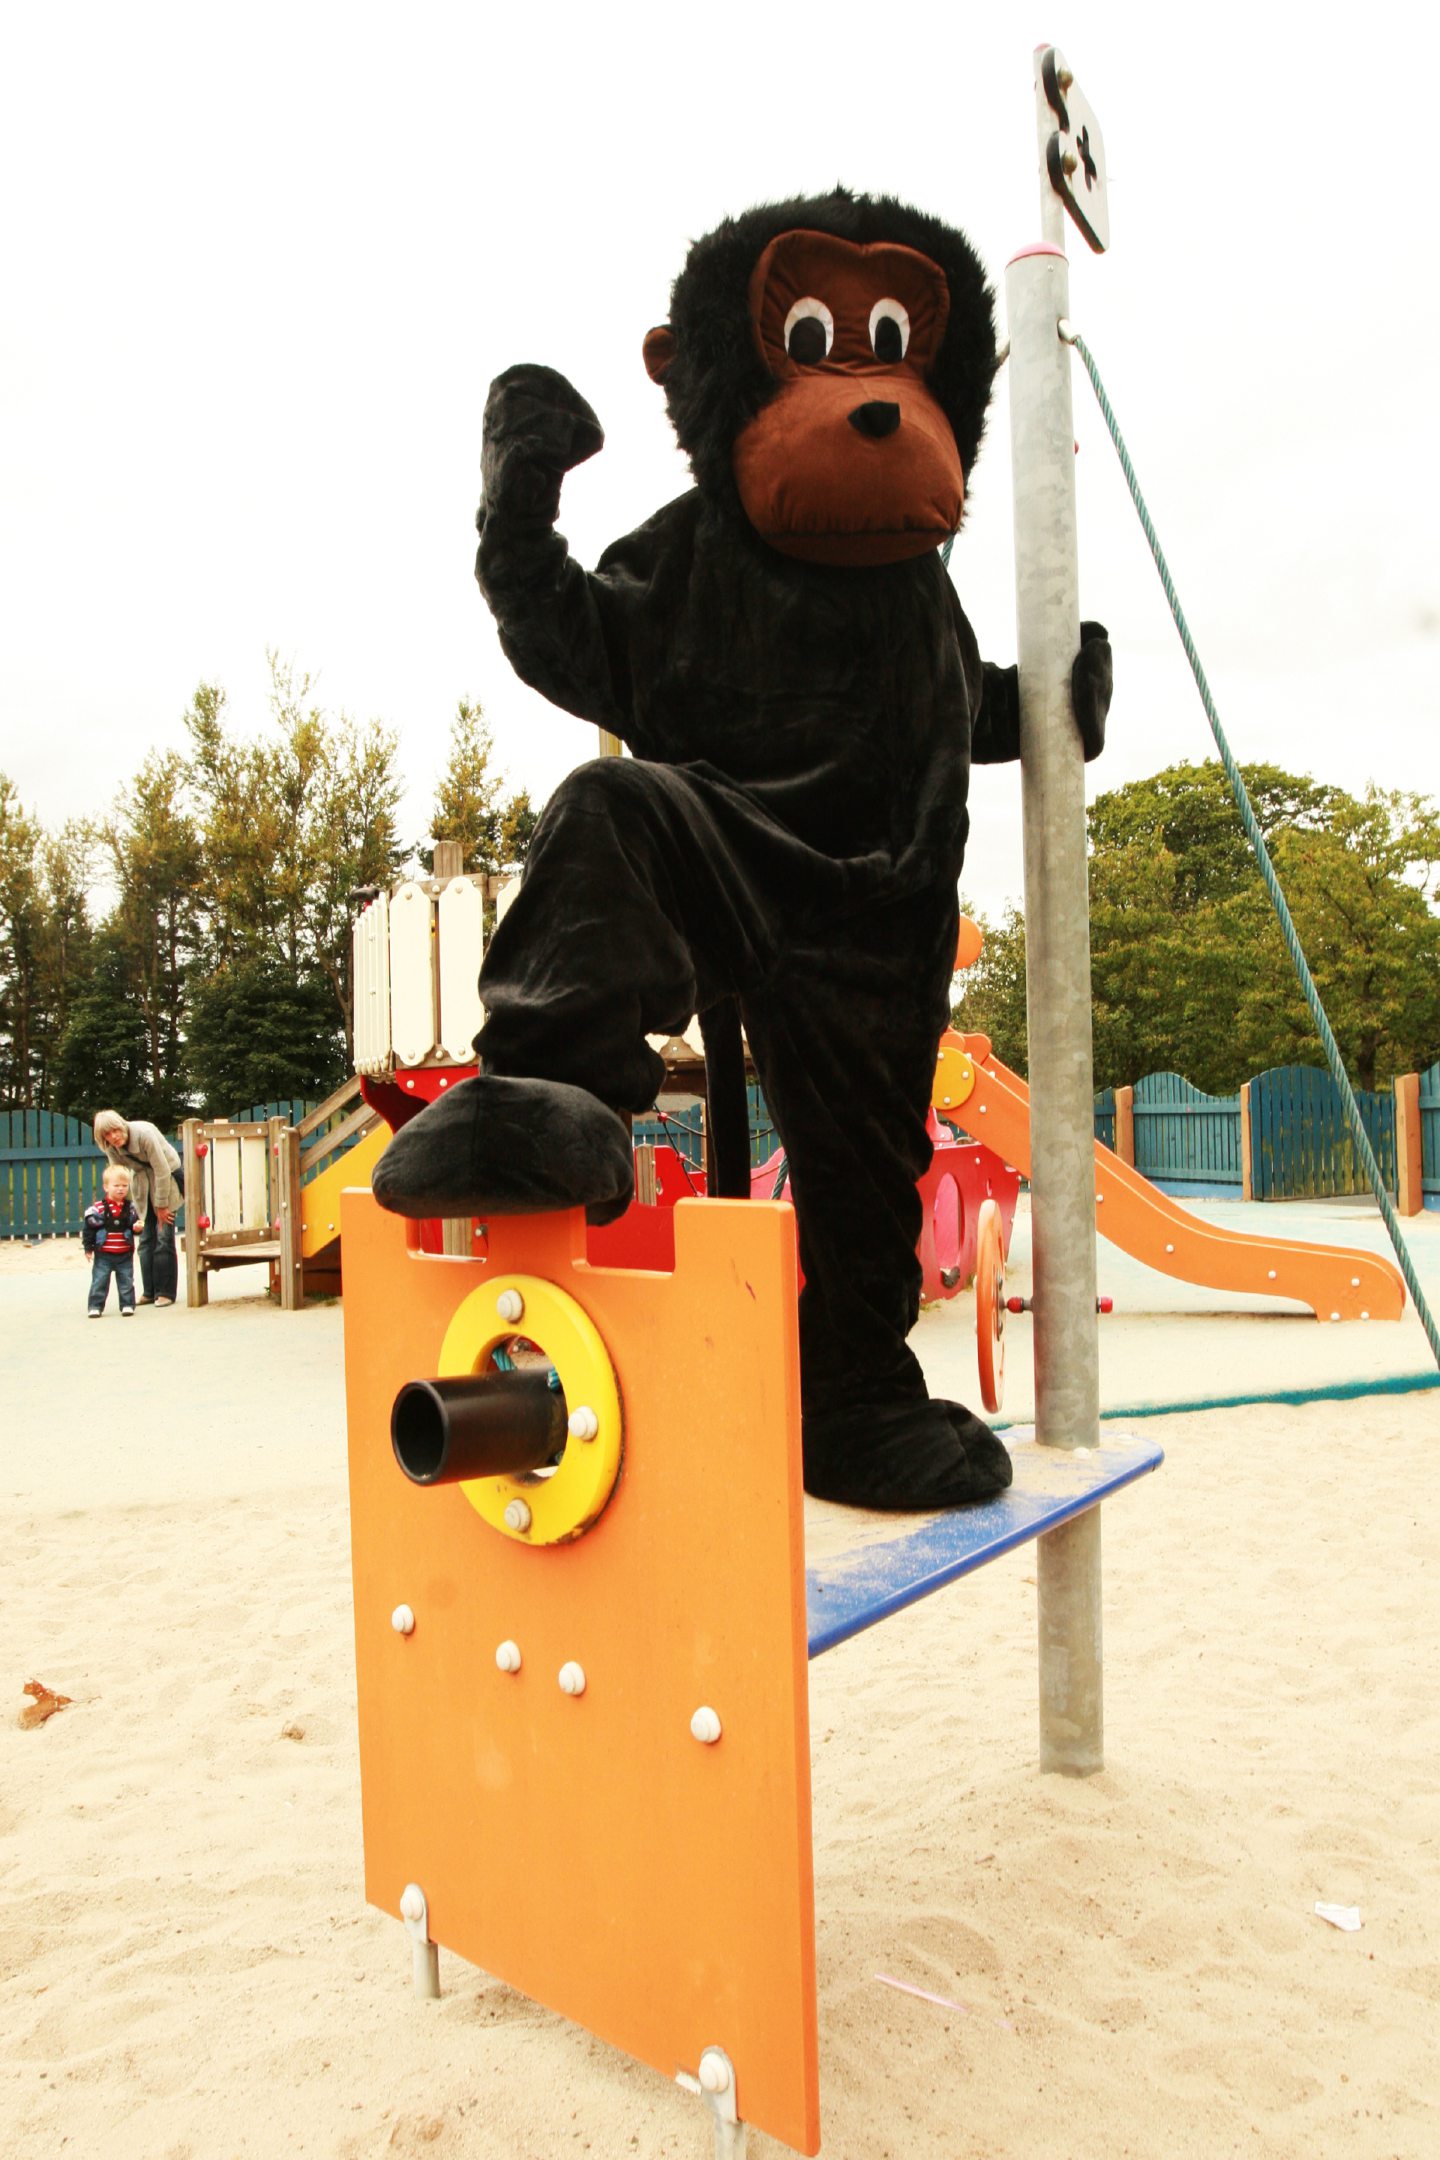 Mac the madcap monkey in Camperdown Park adventure playground. Image: DC Thomson.